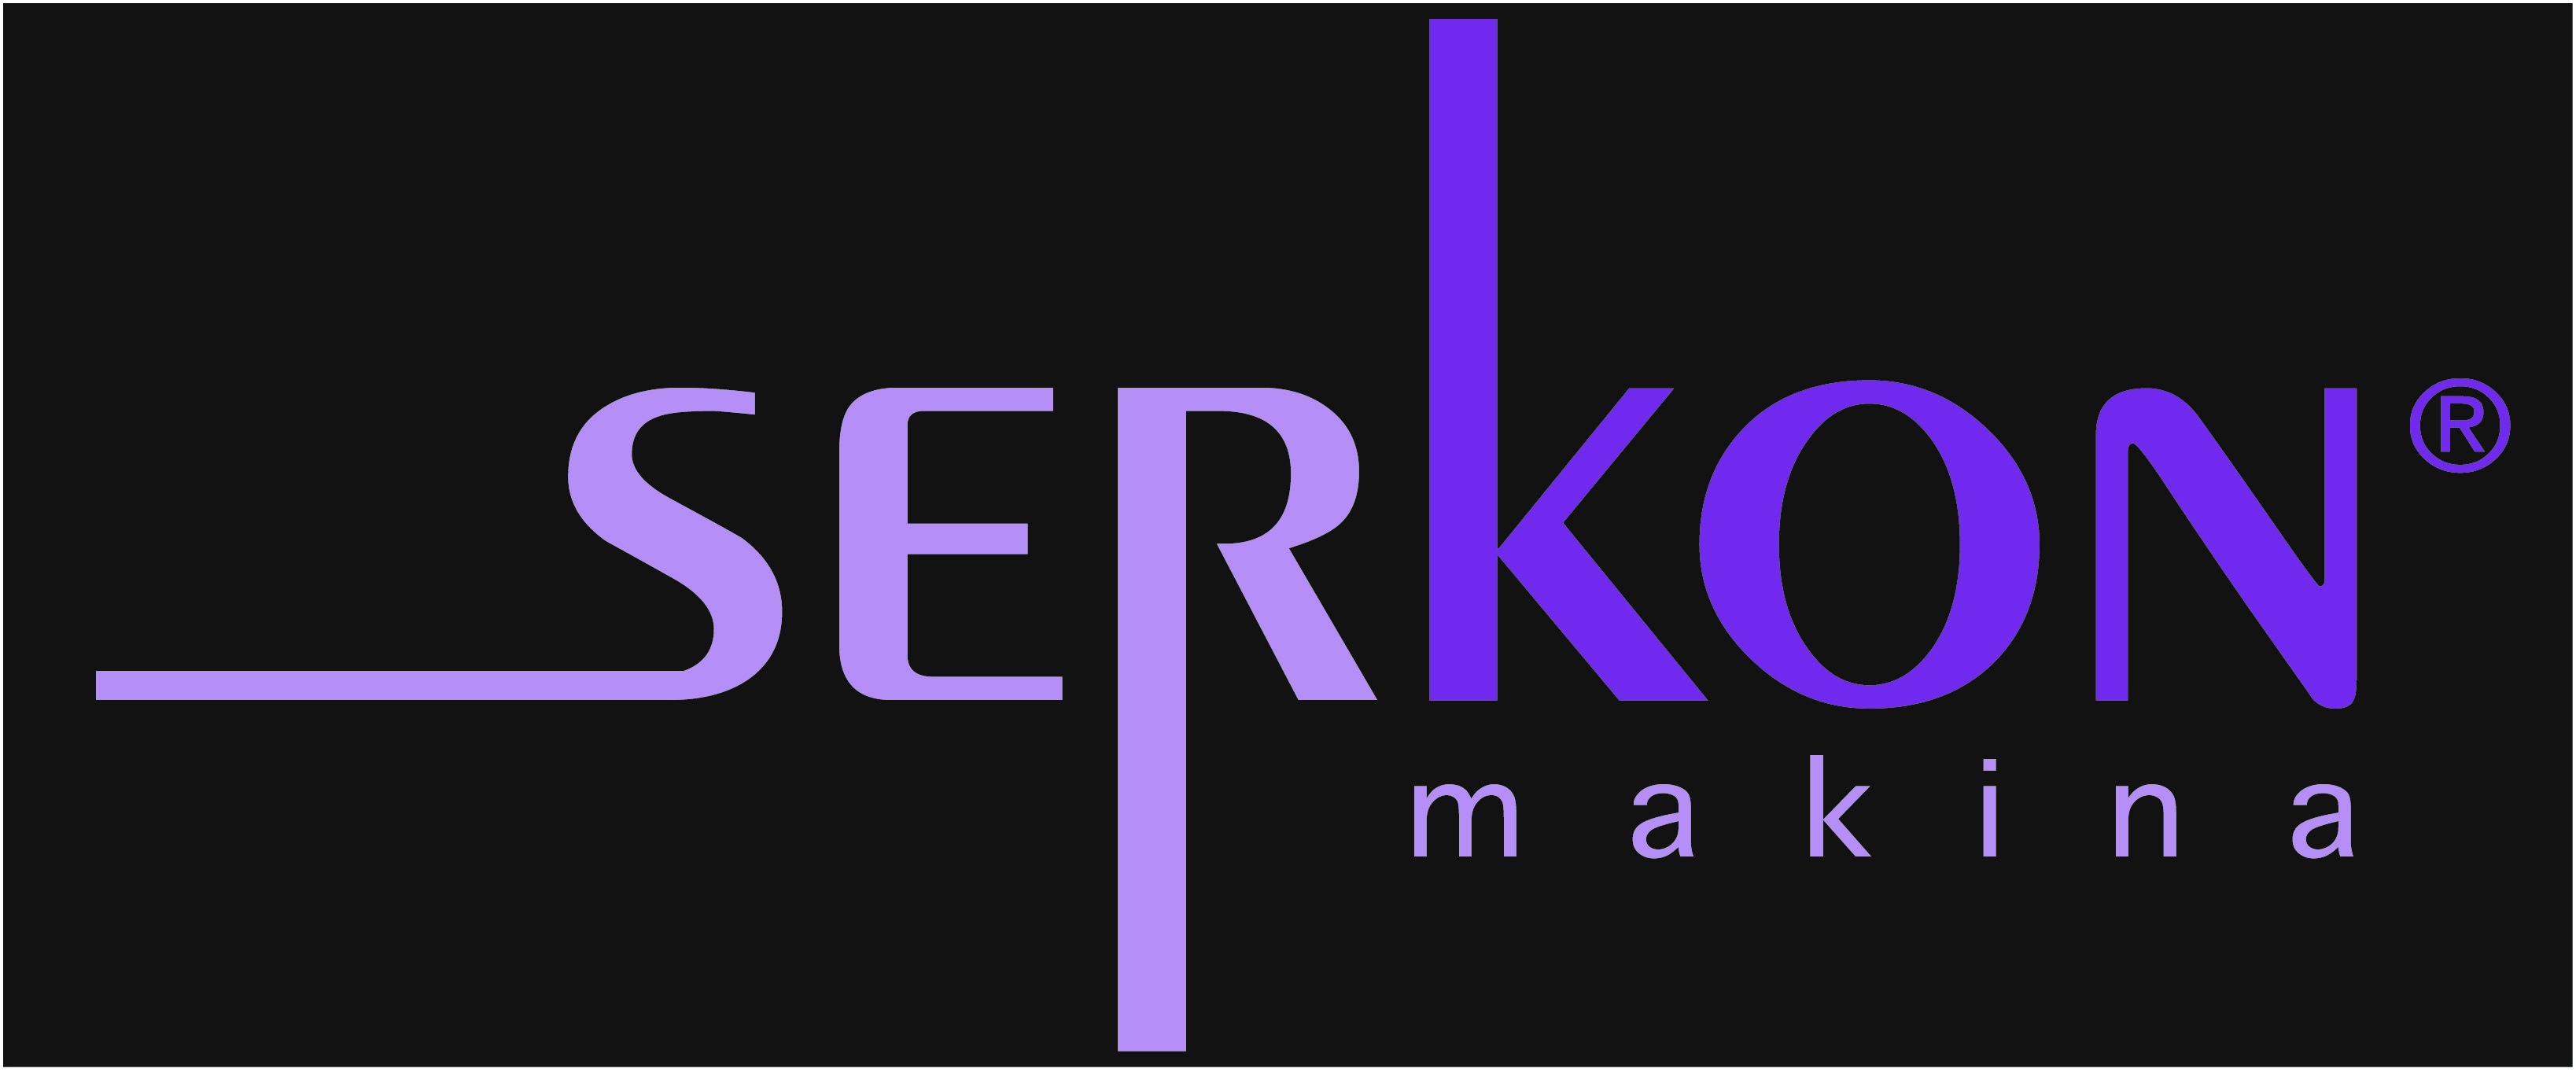 serkon logo1